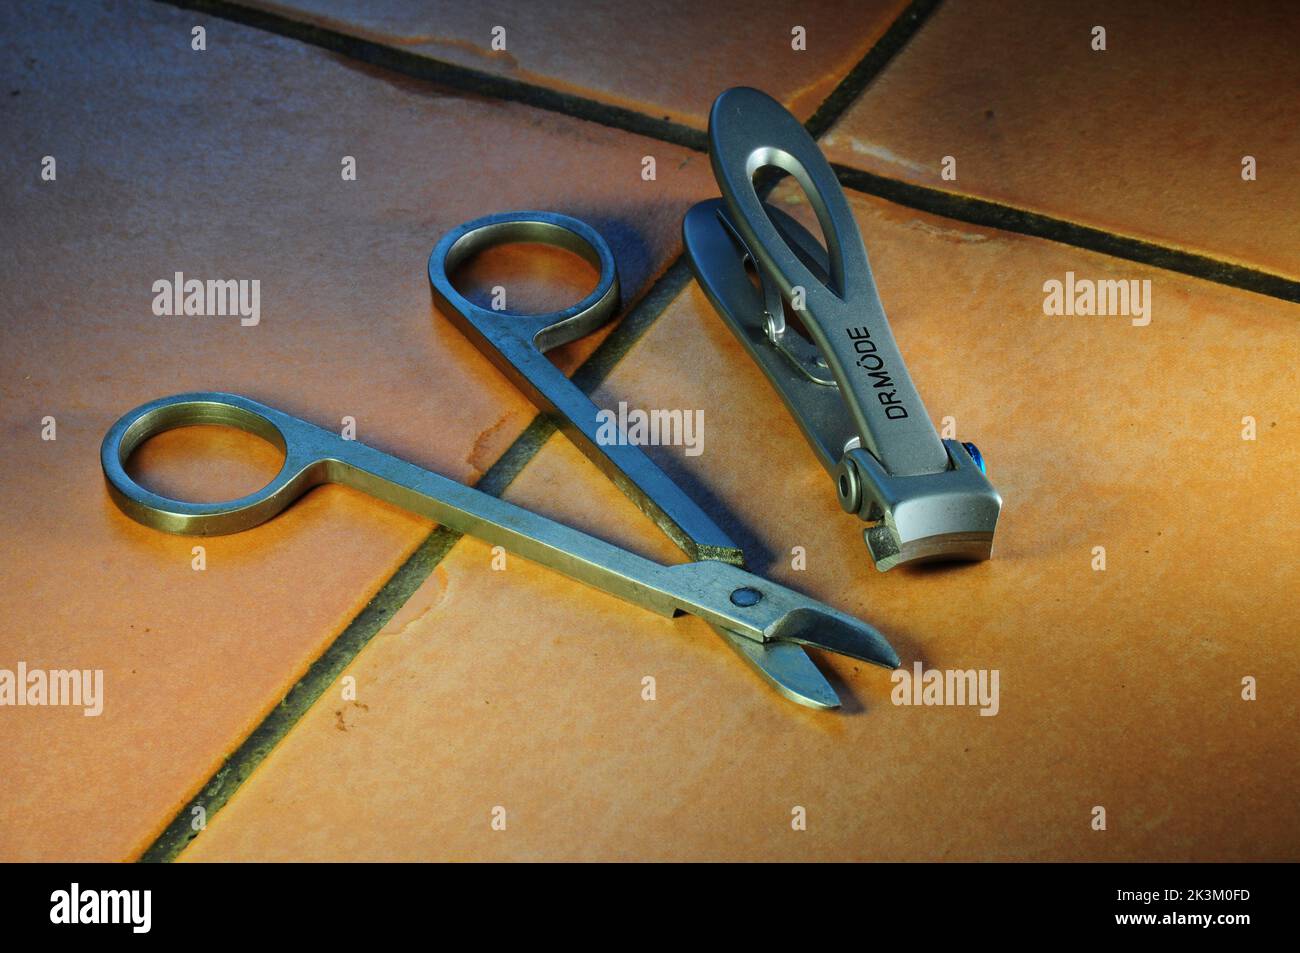 https://c8.alamy.com/comp/2K3M0FD/finger-nail-scissors-and-toe-nail-clippers-2K3M0FD.jpg